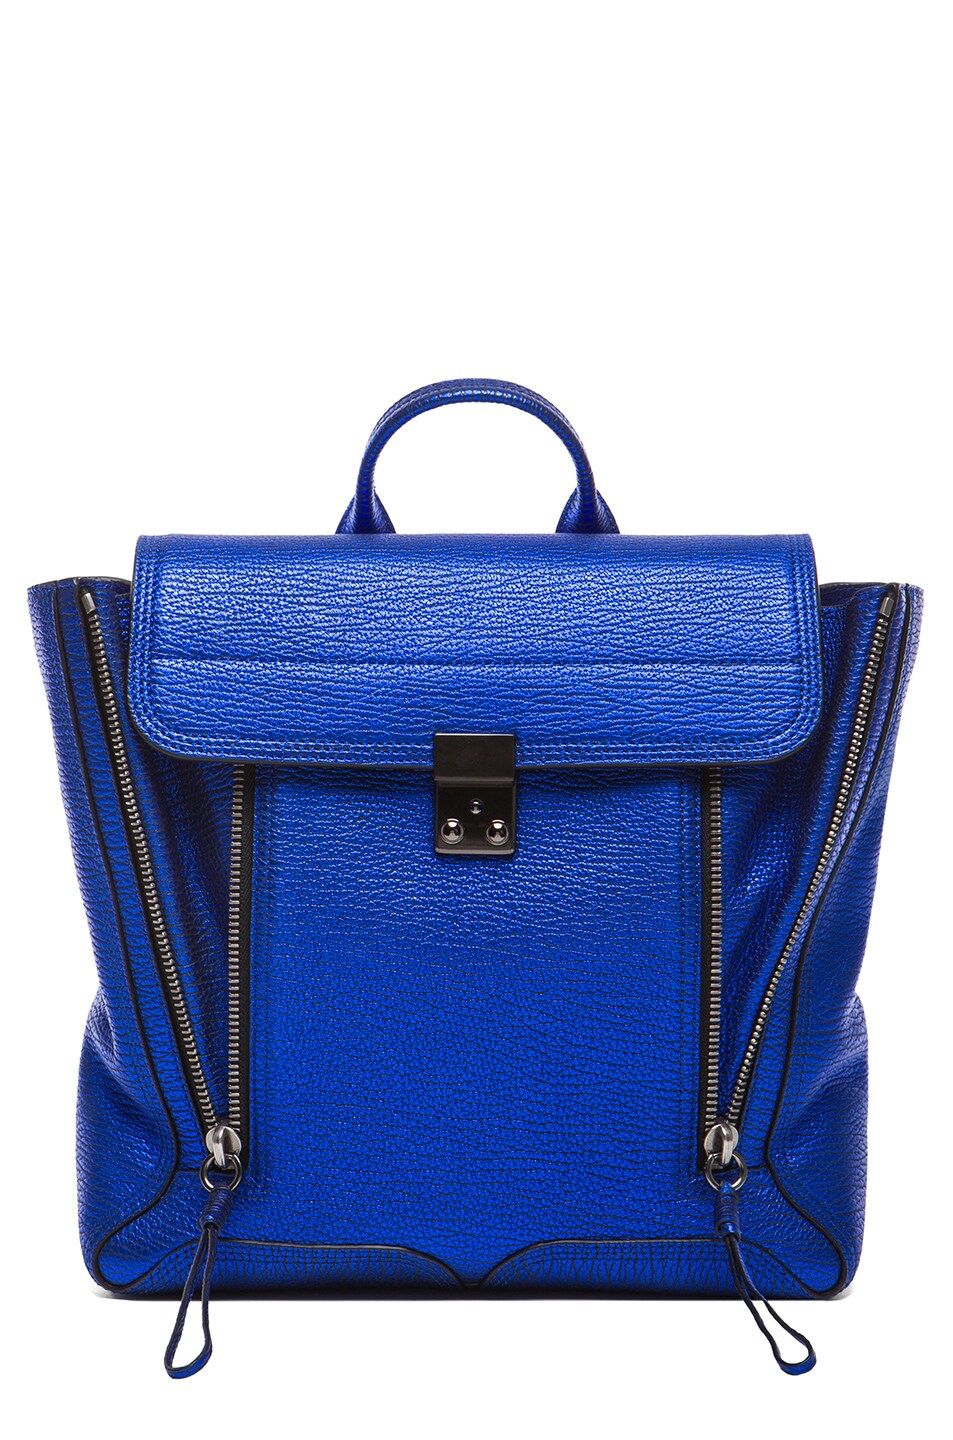 Image 1 of 3.1 phillip lim Pashli Backpack in Electric Blue & Gunmetal